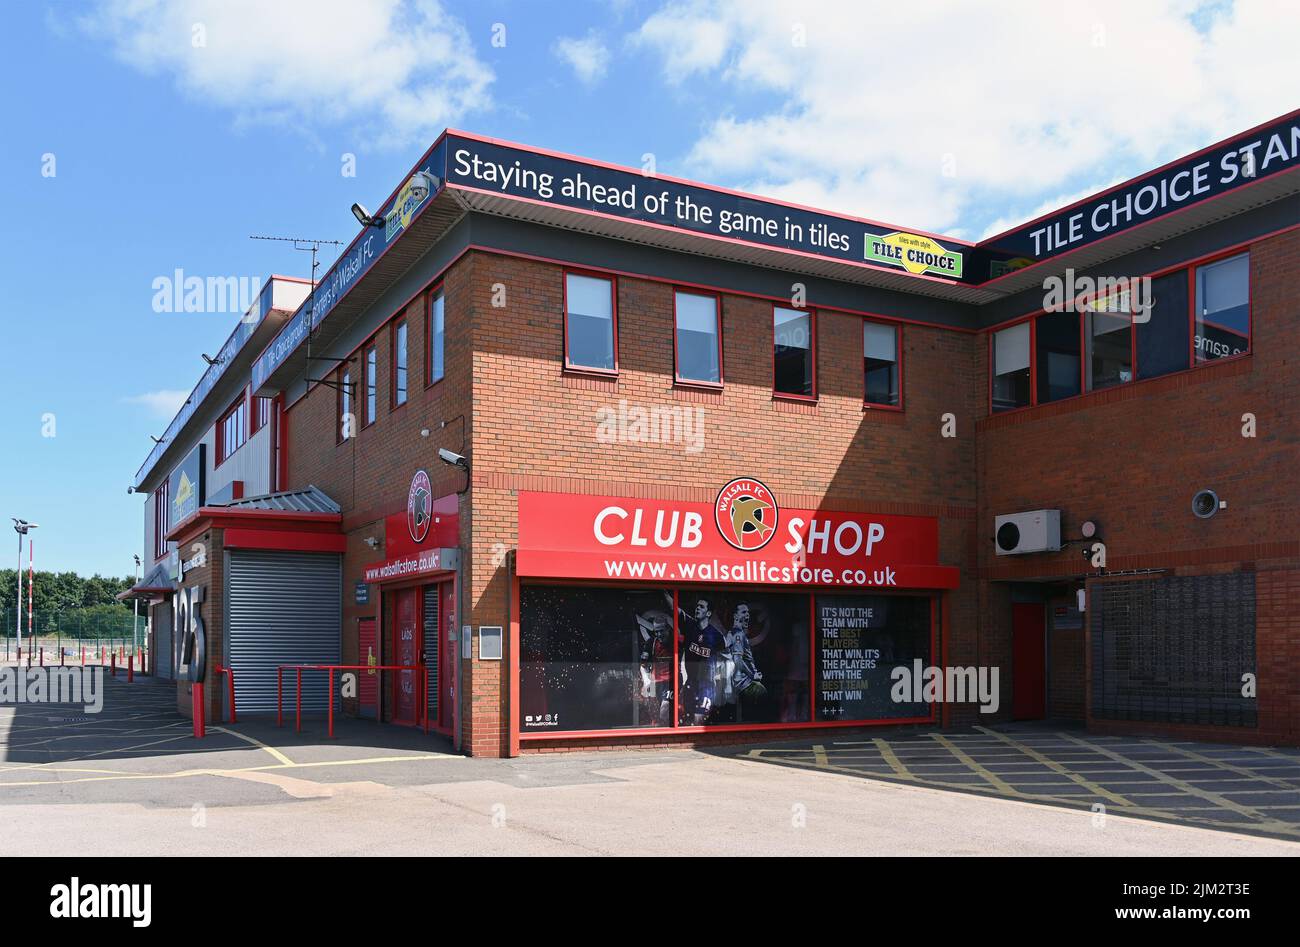 The Walsall F.C. Store. Bescot Poundland Stadium. Walsall Football Club Ground. Walsall, West Midlands, England, United Kingdom, Europe. Stock Photo